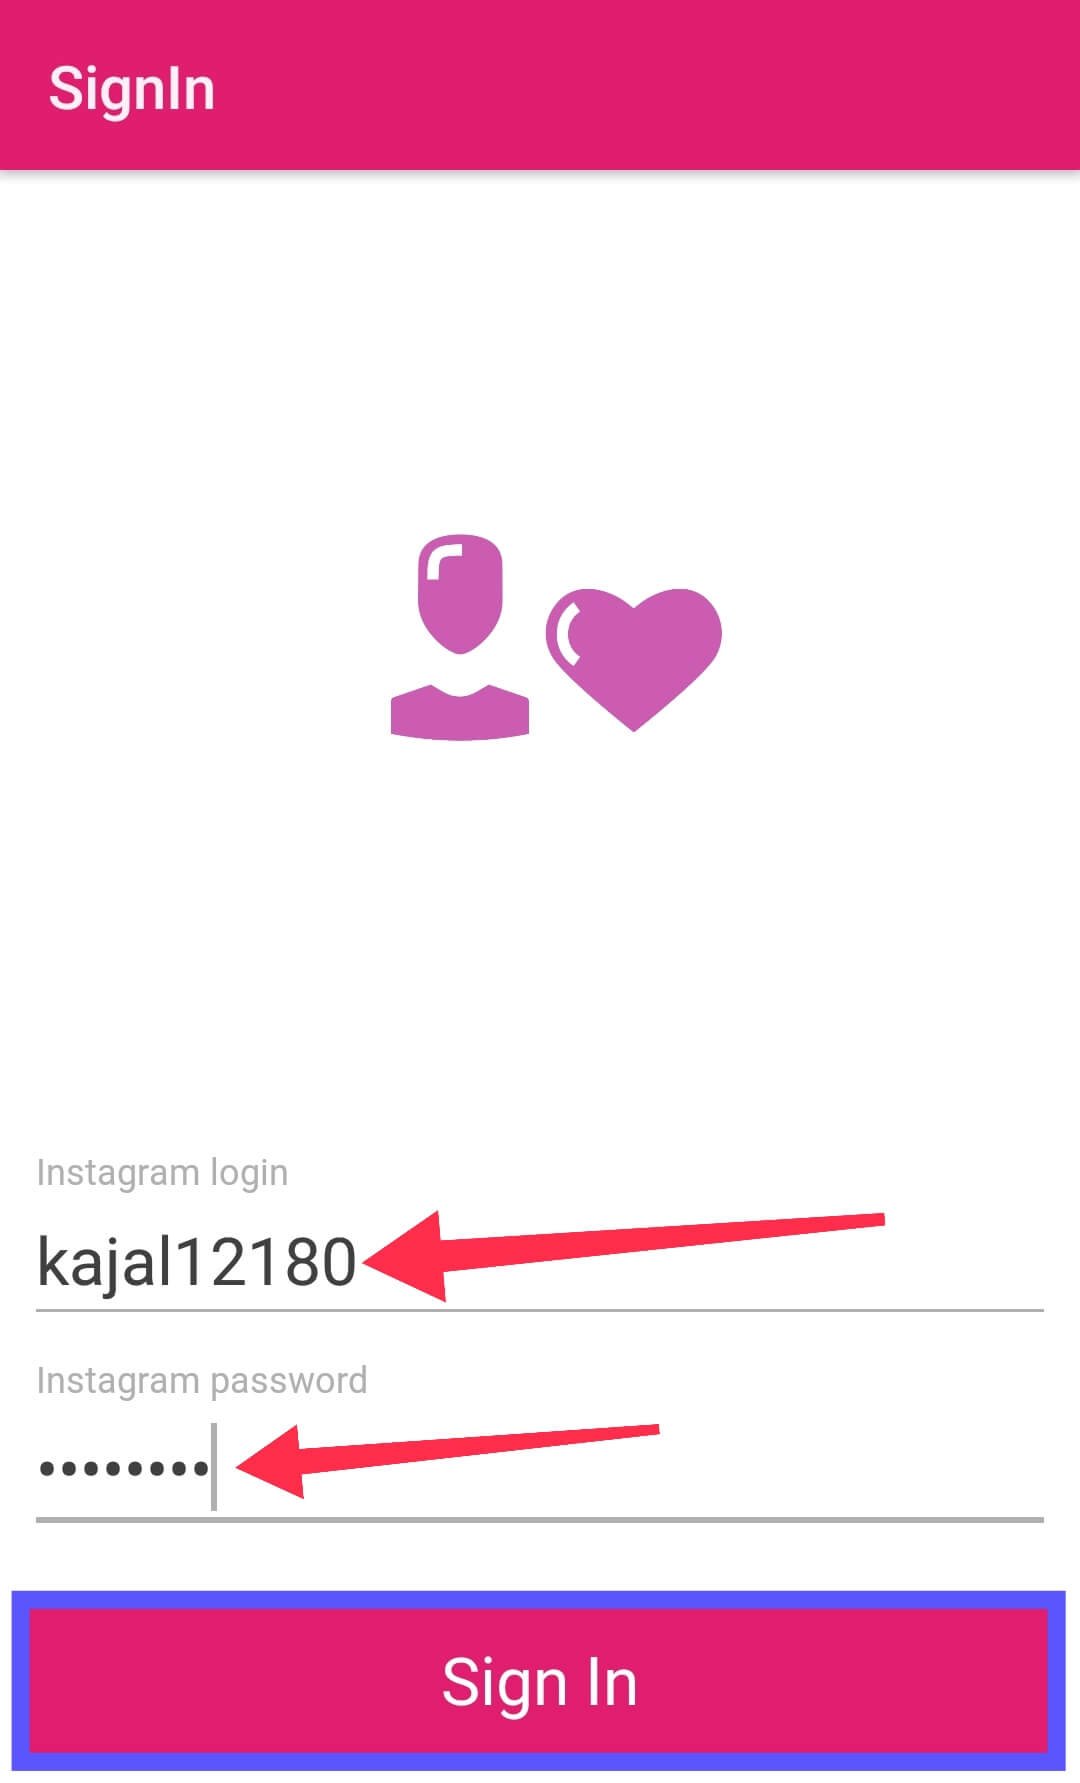 Login Your Fake Instagram Account